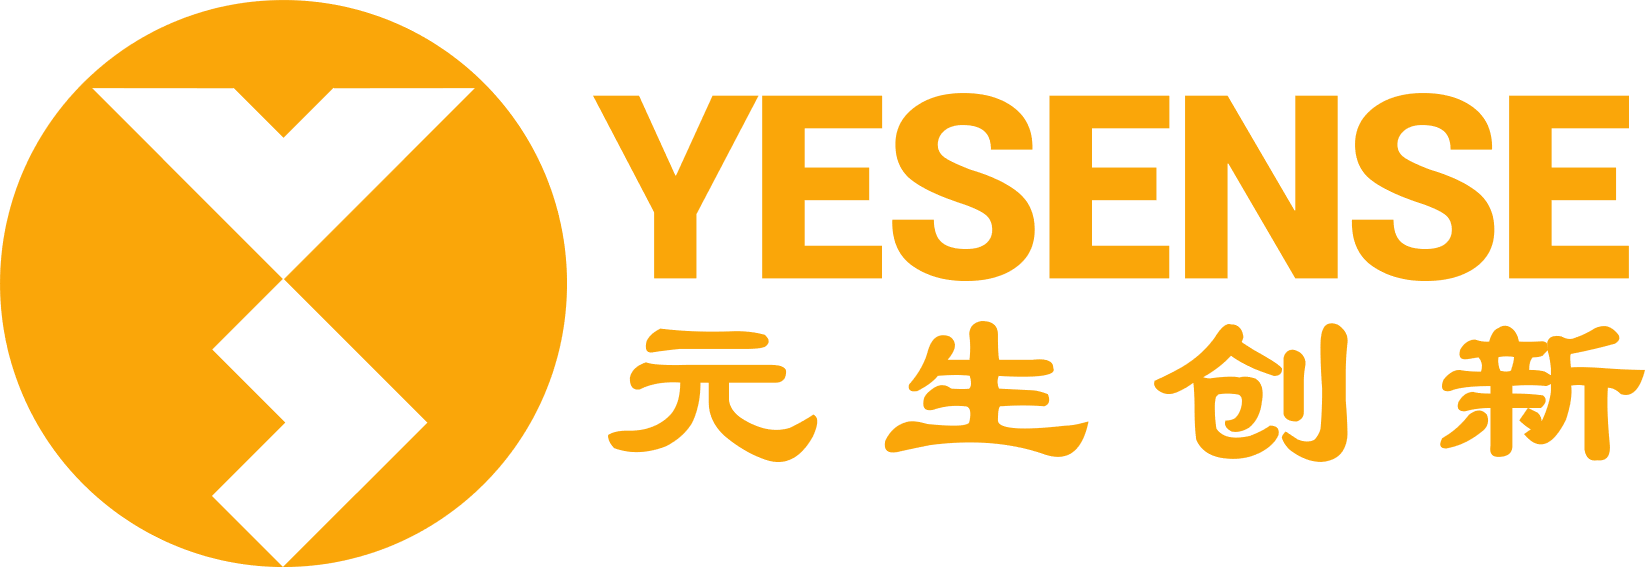 YESENSE-黄